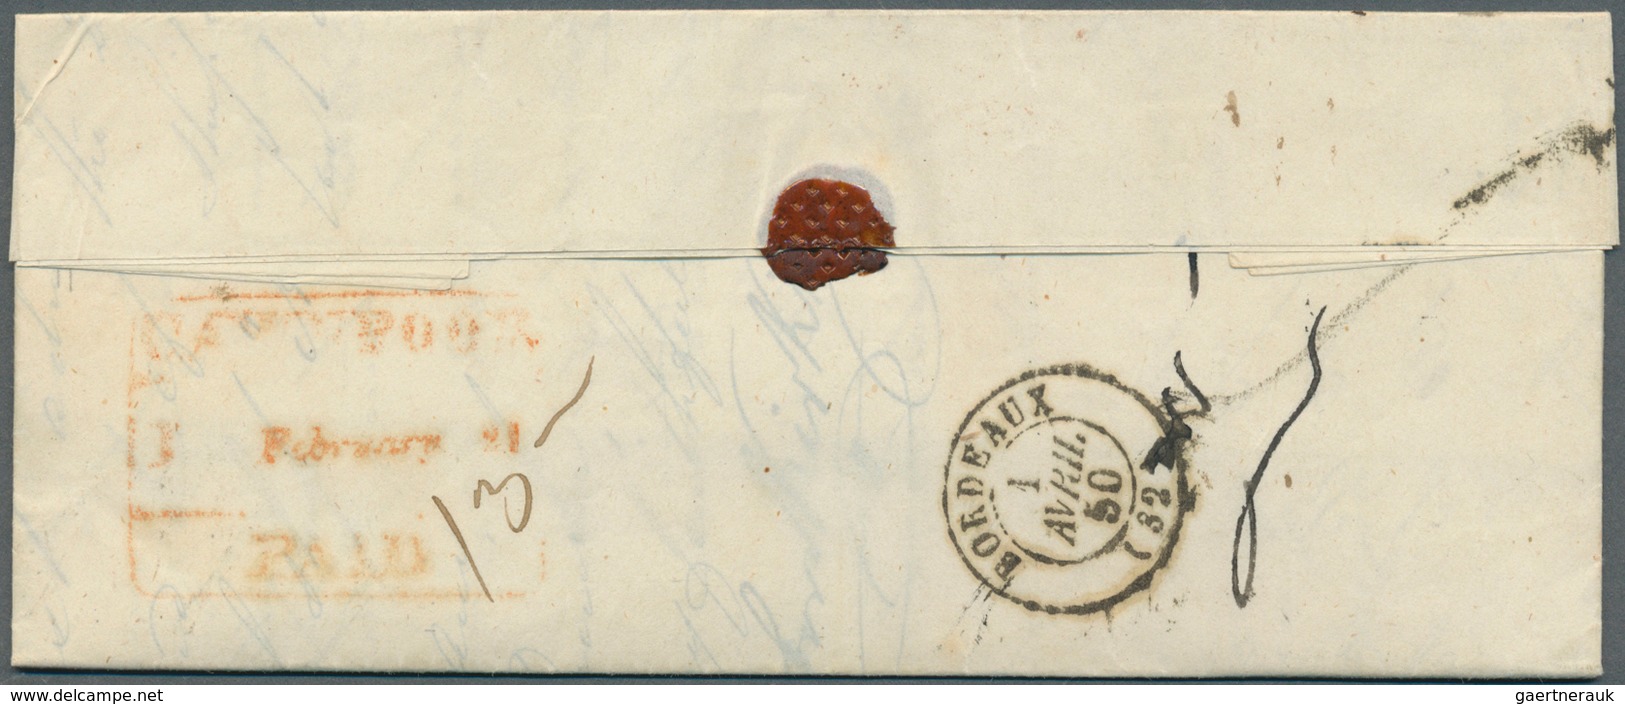 Indien - Vorphilatelie: 1827-1850: Four letters to Bordeaux, FRANCE, with 1) 1827 letter from Calcut